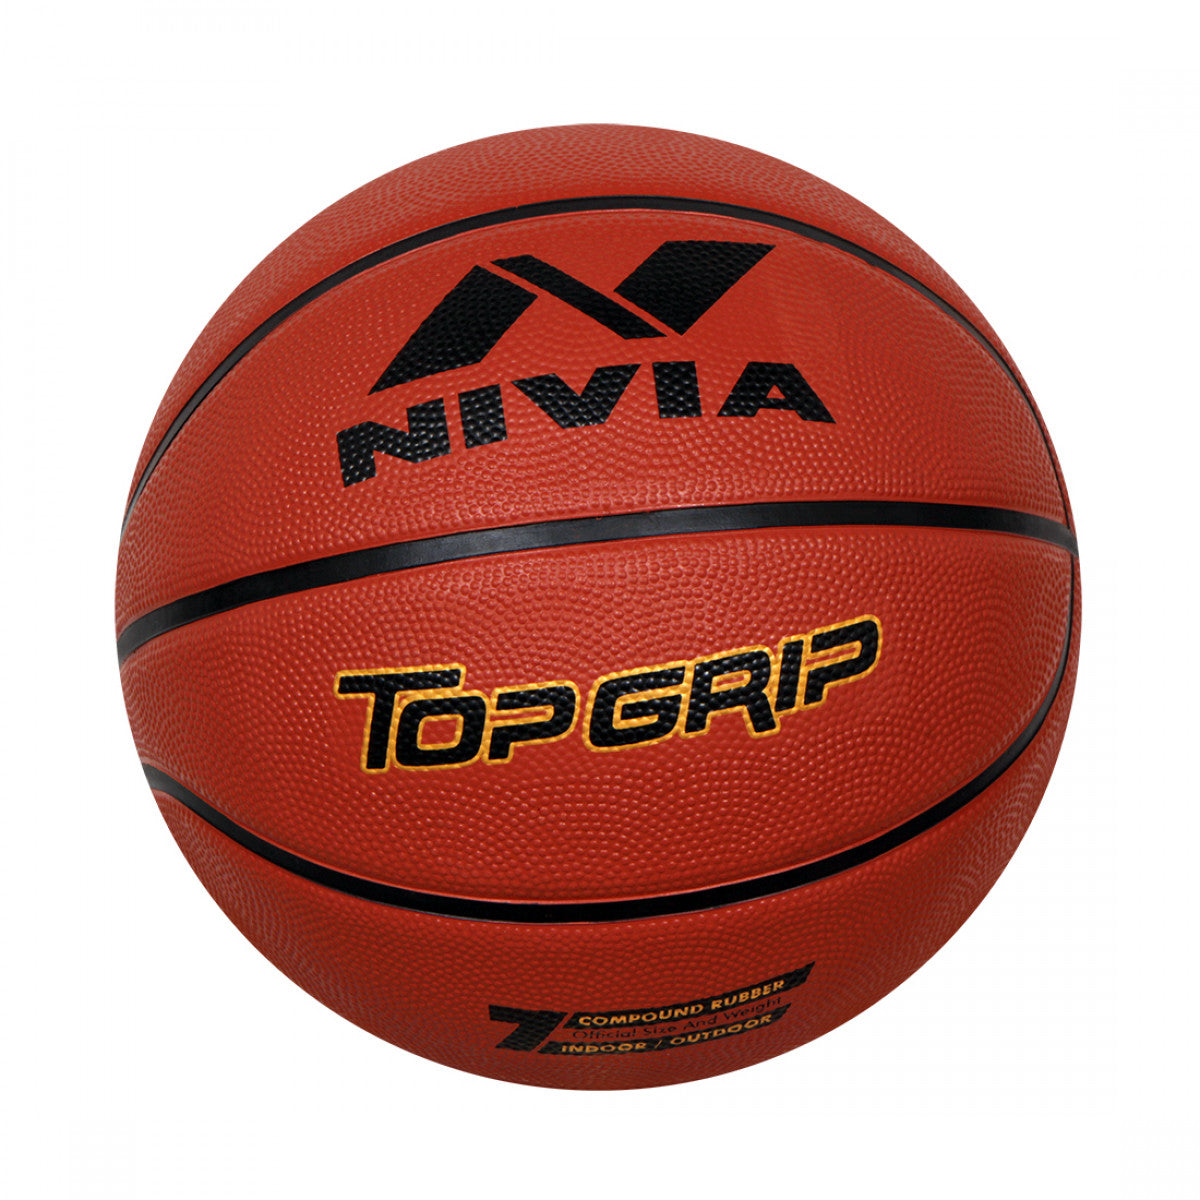 NIVIA Top Grip Basketball Size - 7